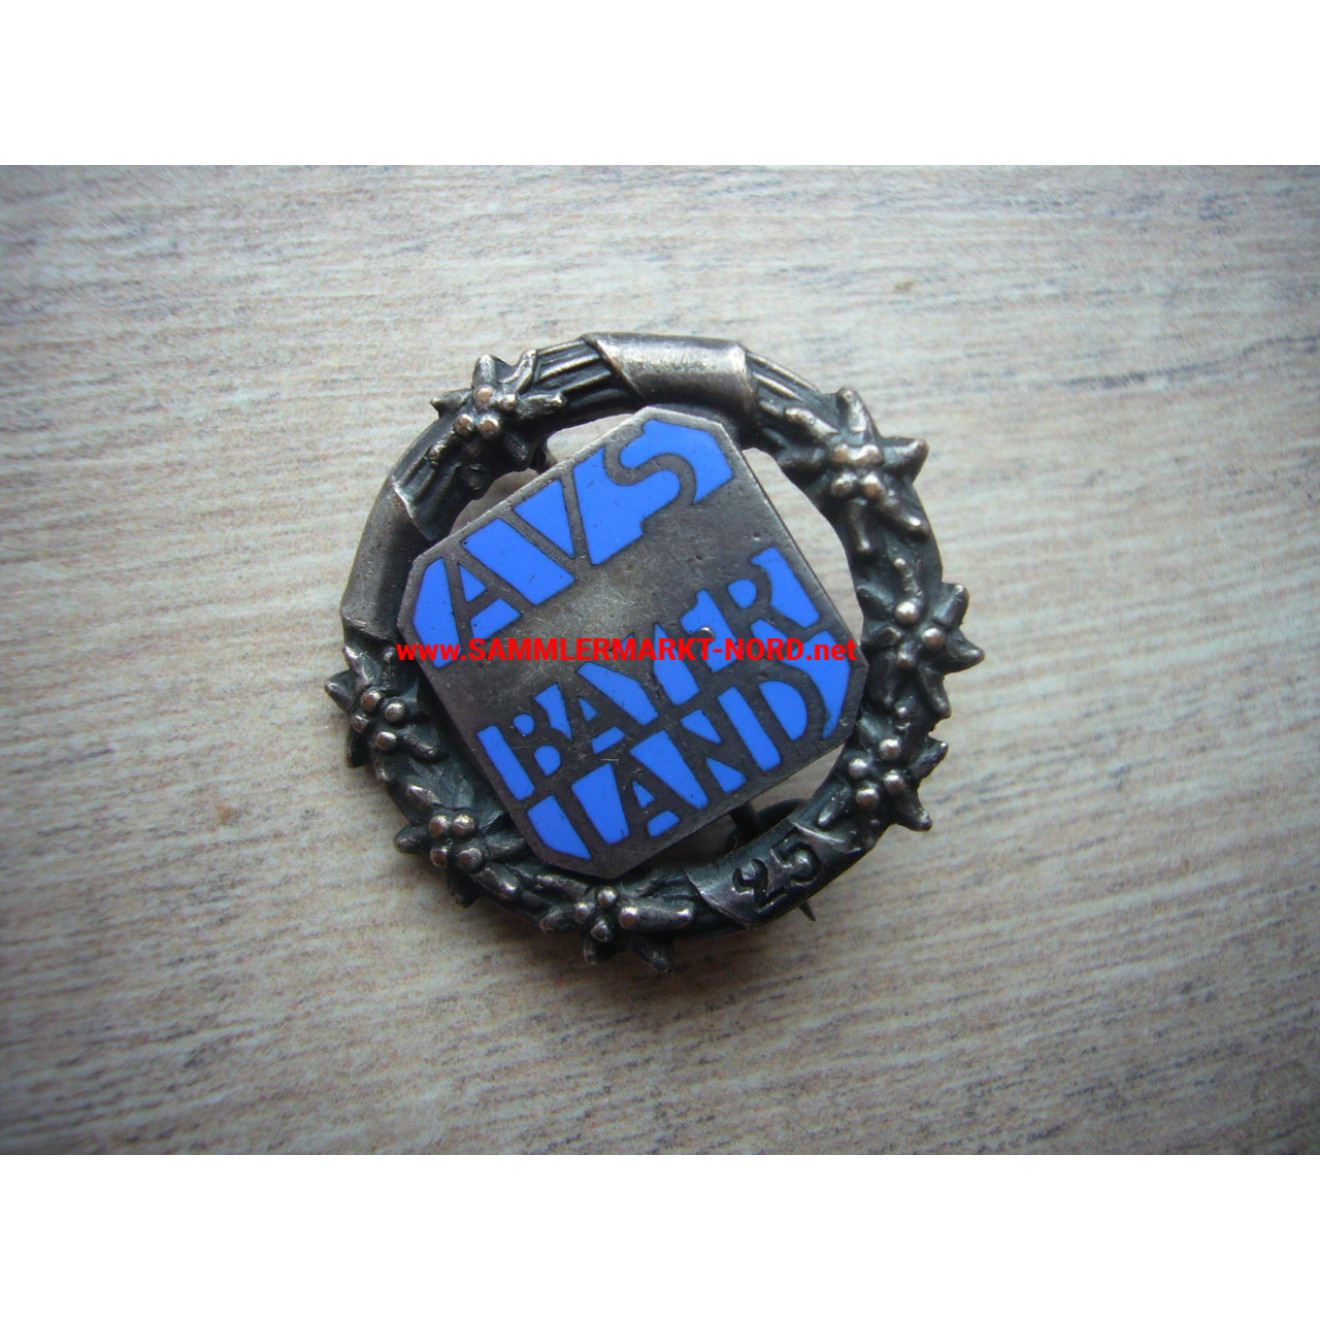 AVS Alpine Club Bavarian Section - Badge 25 years